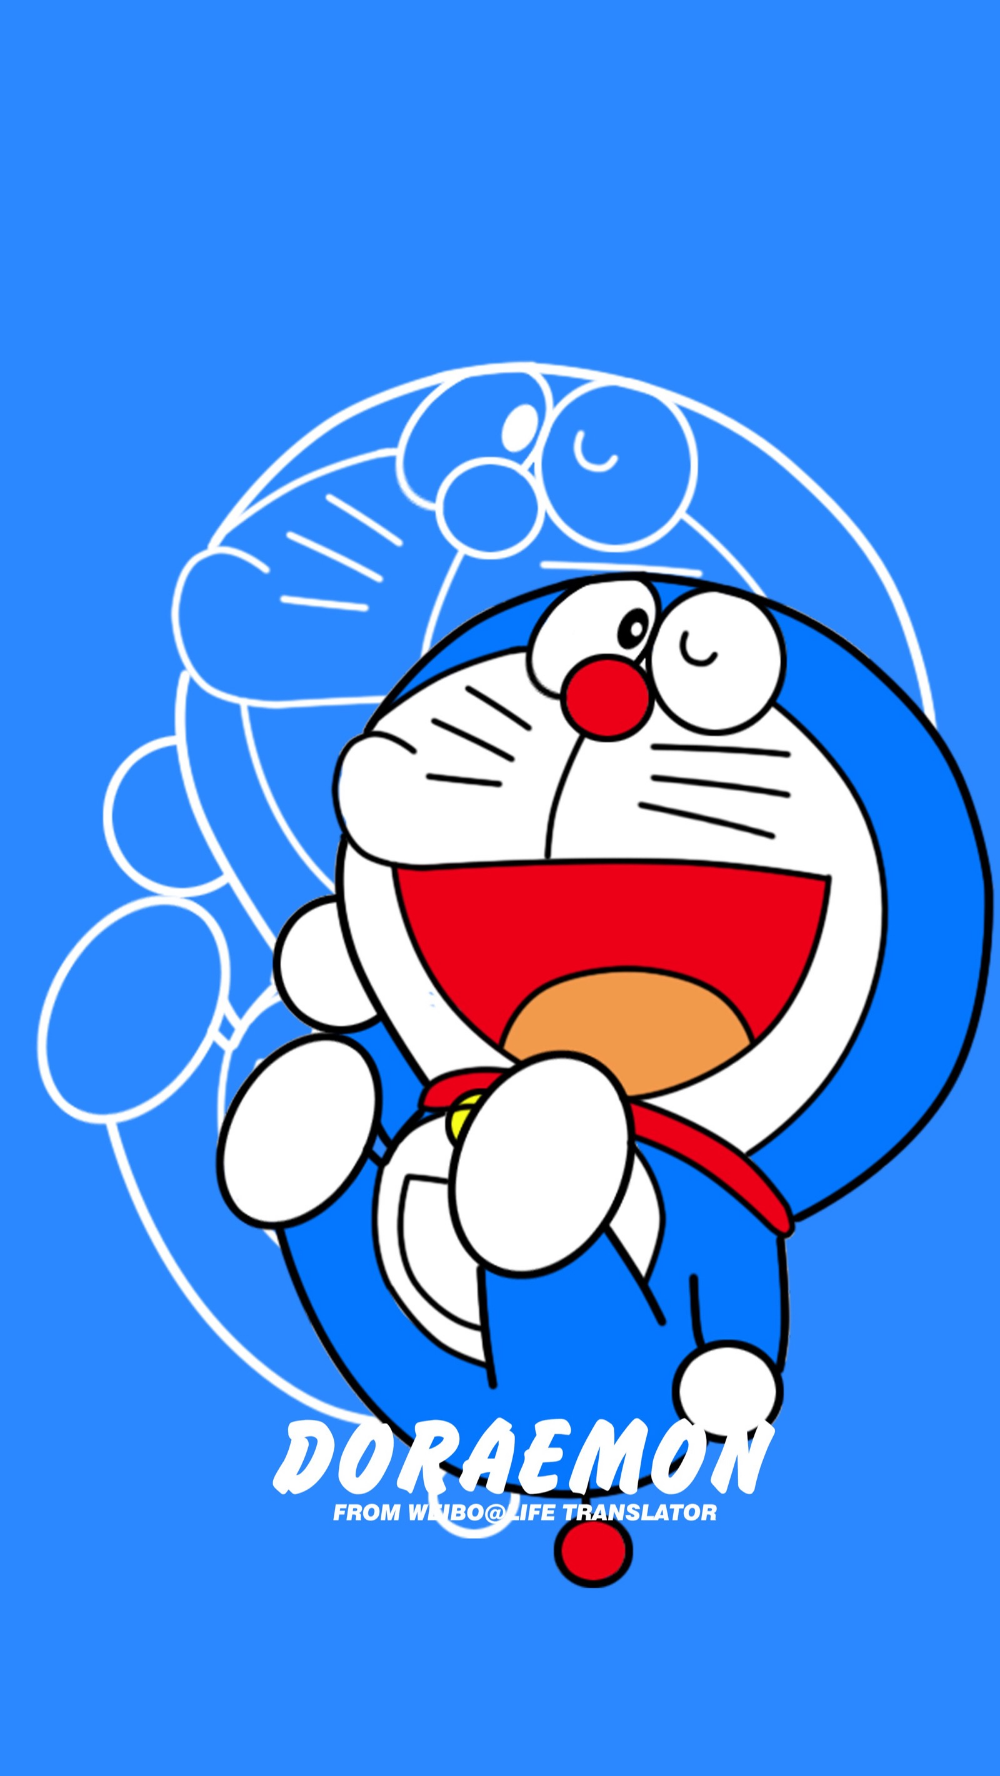 Doraemon wallpaper discover more character cute doraemon japanese manga series wallpaper httpswwwenwallpâ doraemon wallpapers doraemon doraemon cartoon